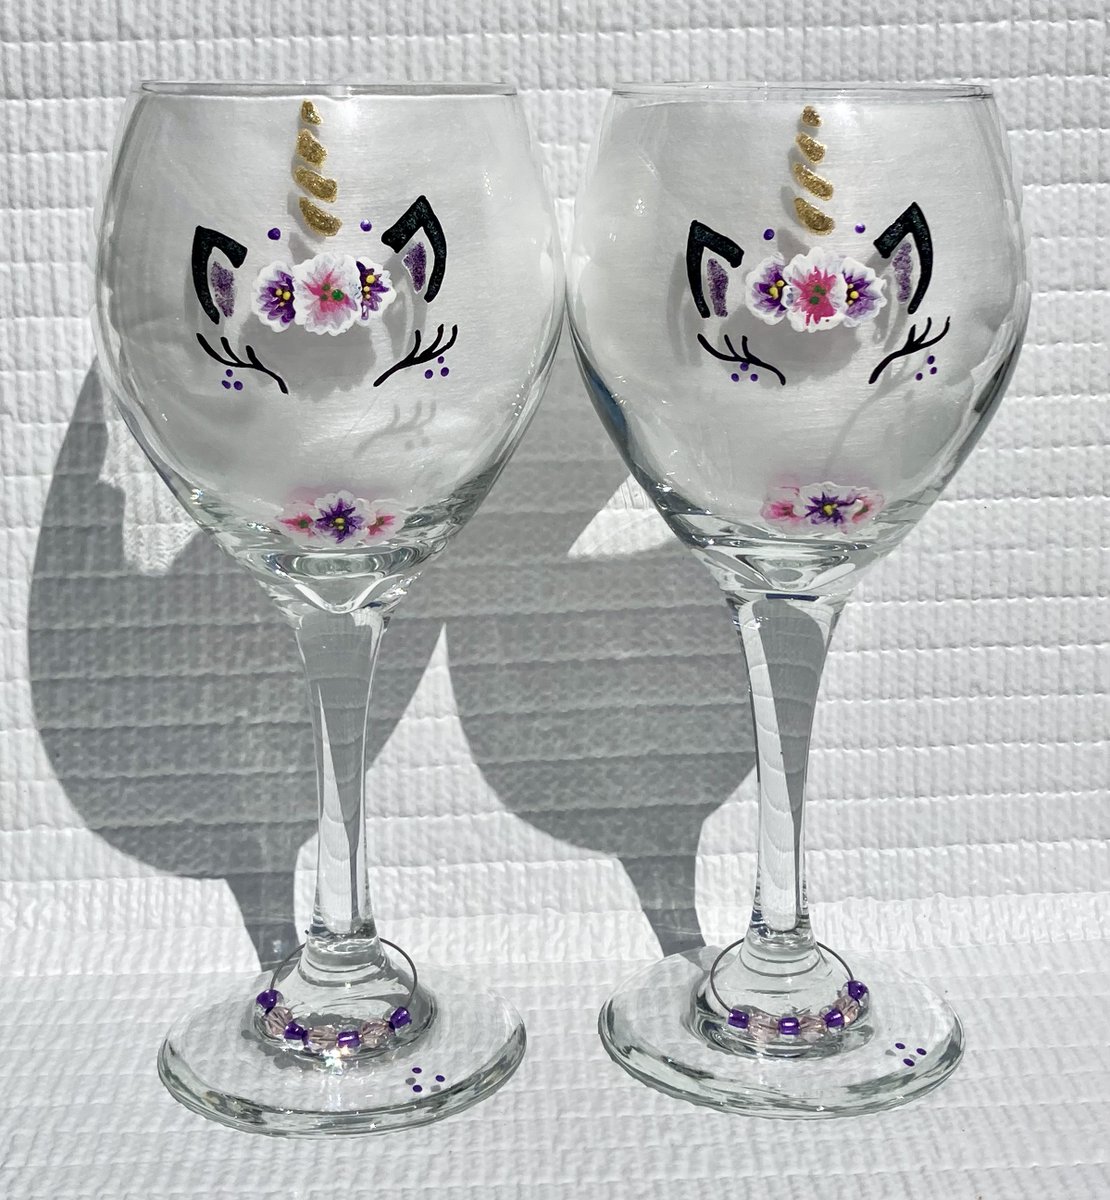 Unicorn wine glasses etsy.com/listing/119058… #wineglasses #unicornglasses #giftforher #SMILEtt23 #giftsunder30 #Christmasgifts #handpaintedglasses #etsyshop